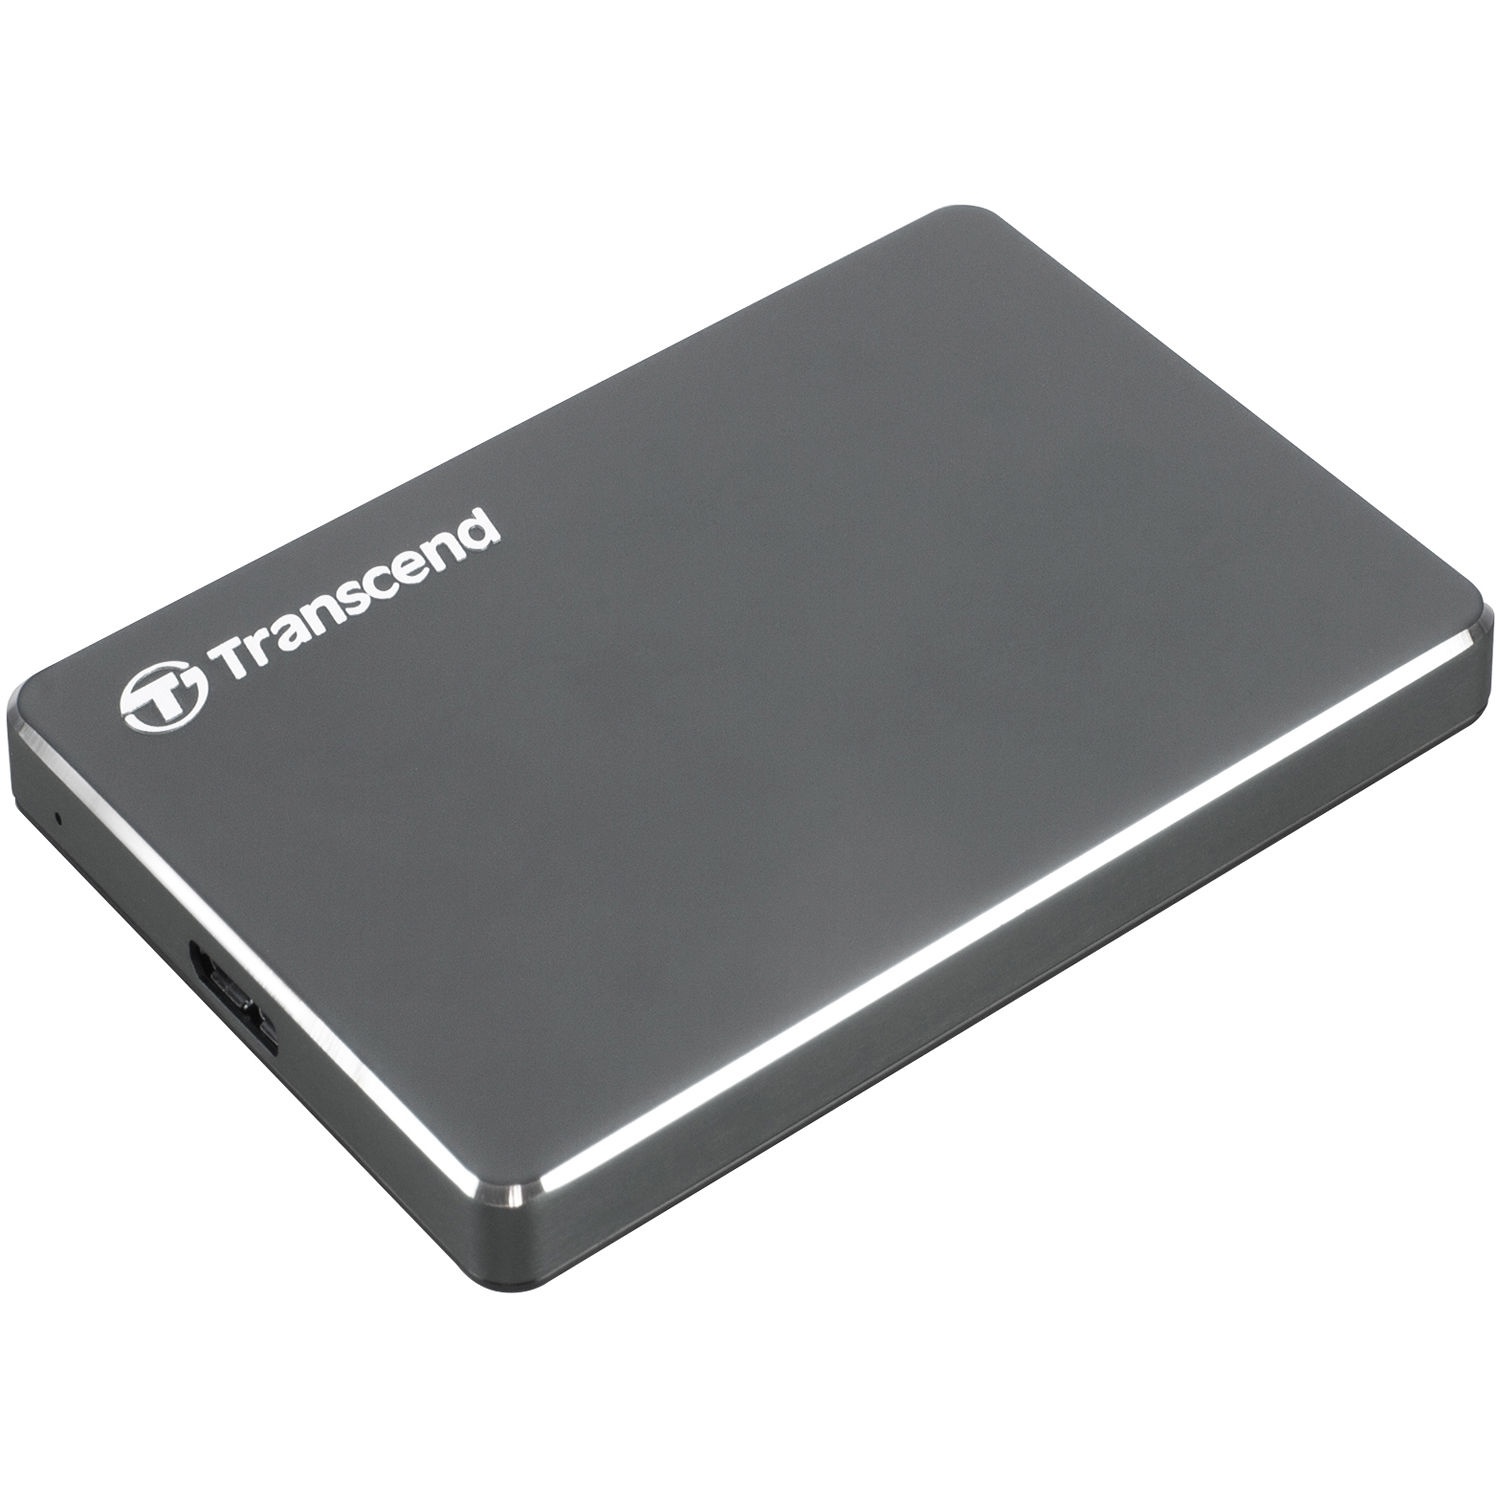 Transcend 1TB StoreJet 25C3 USB 3.0 External Hard Drive